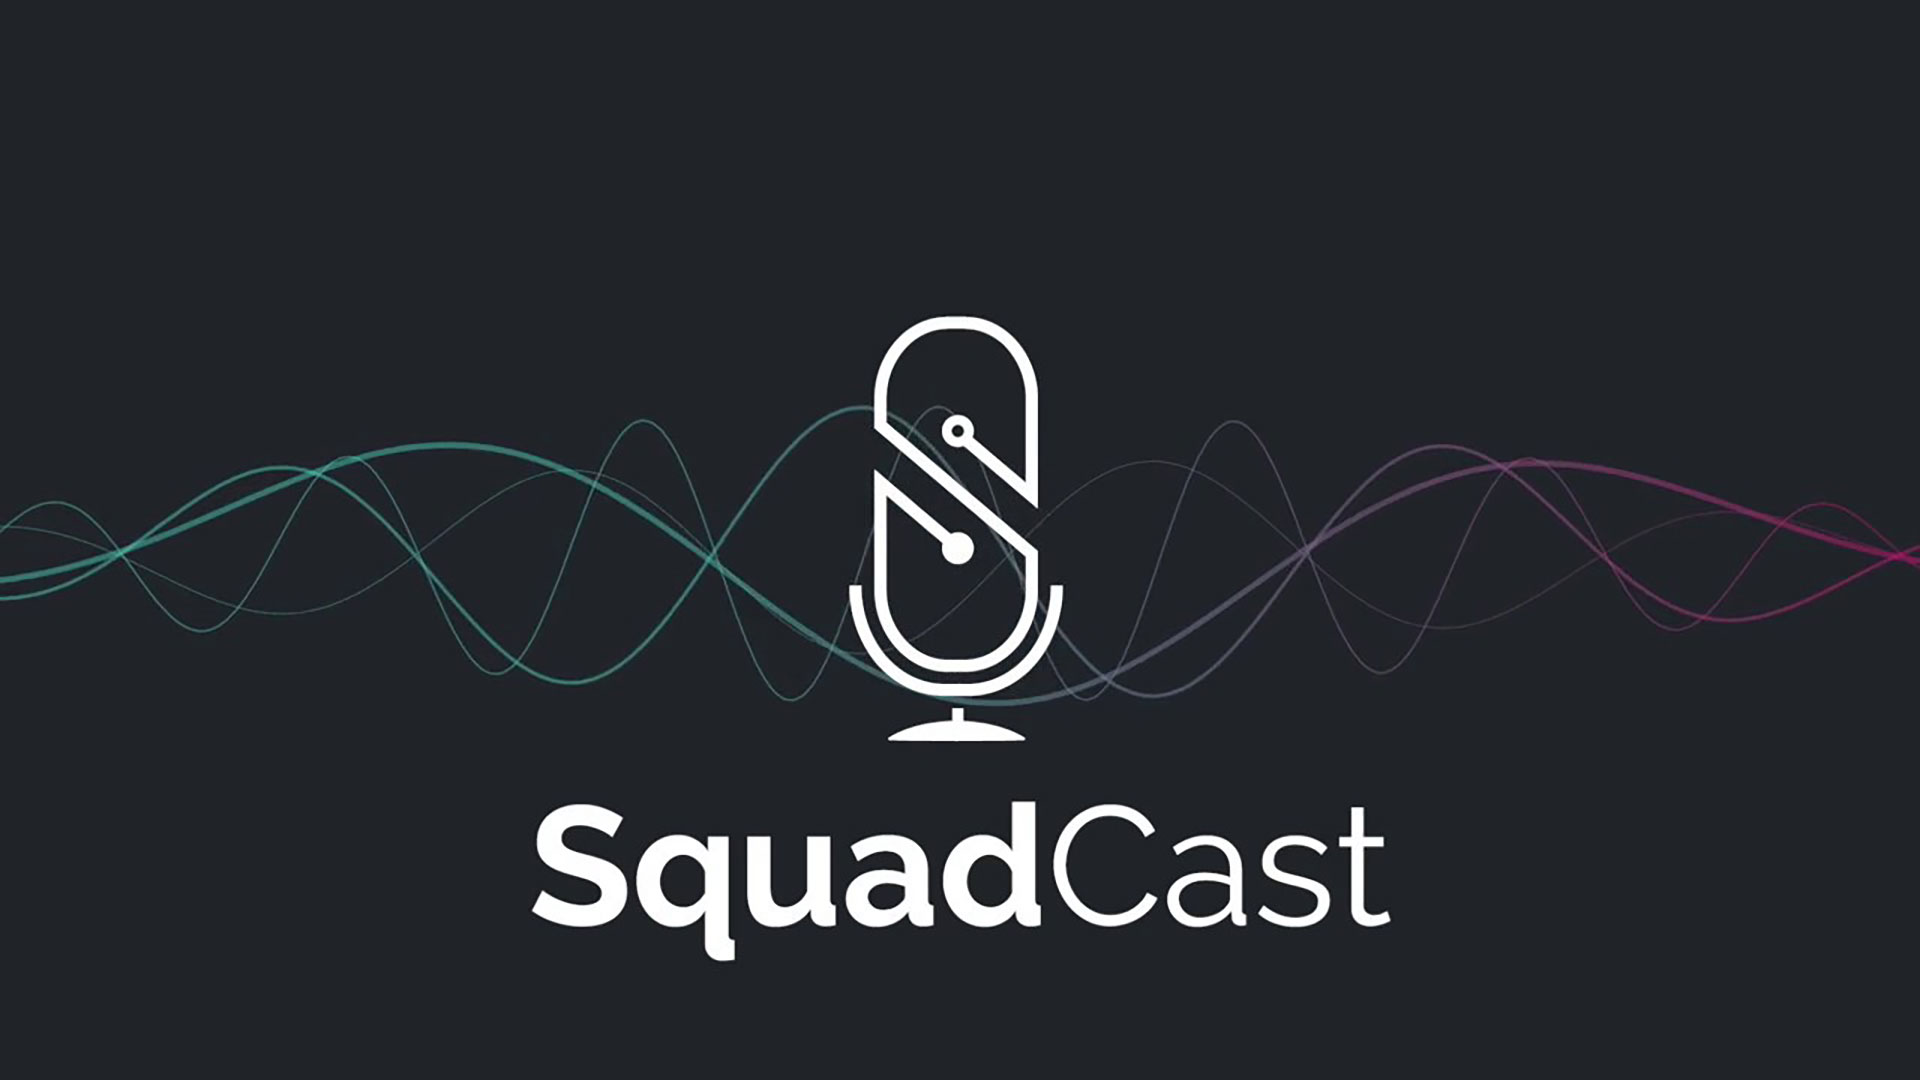 SquadCast Video Broadcasting